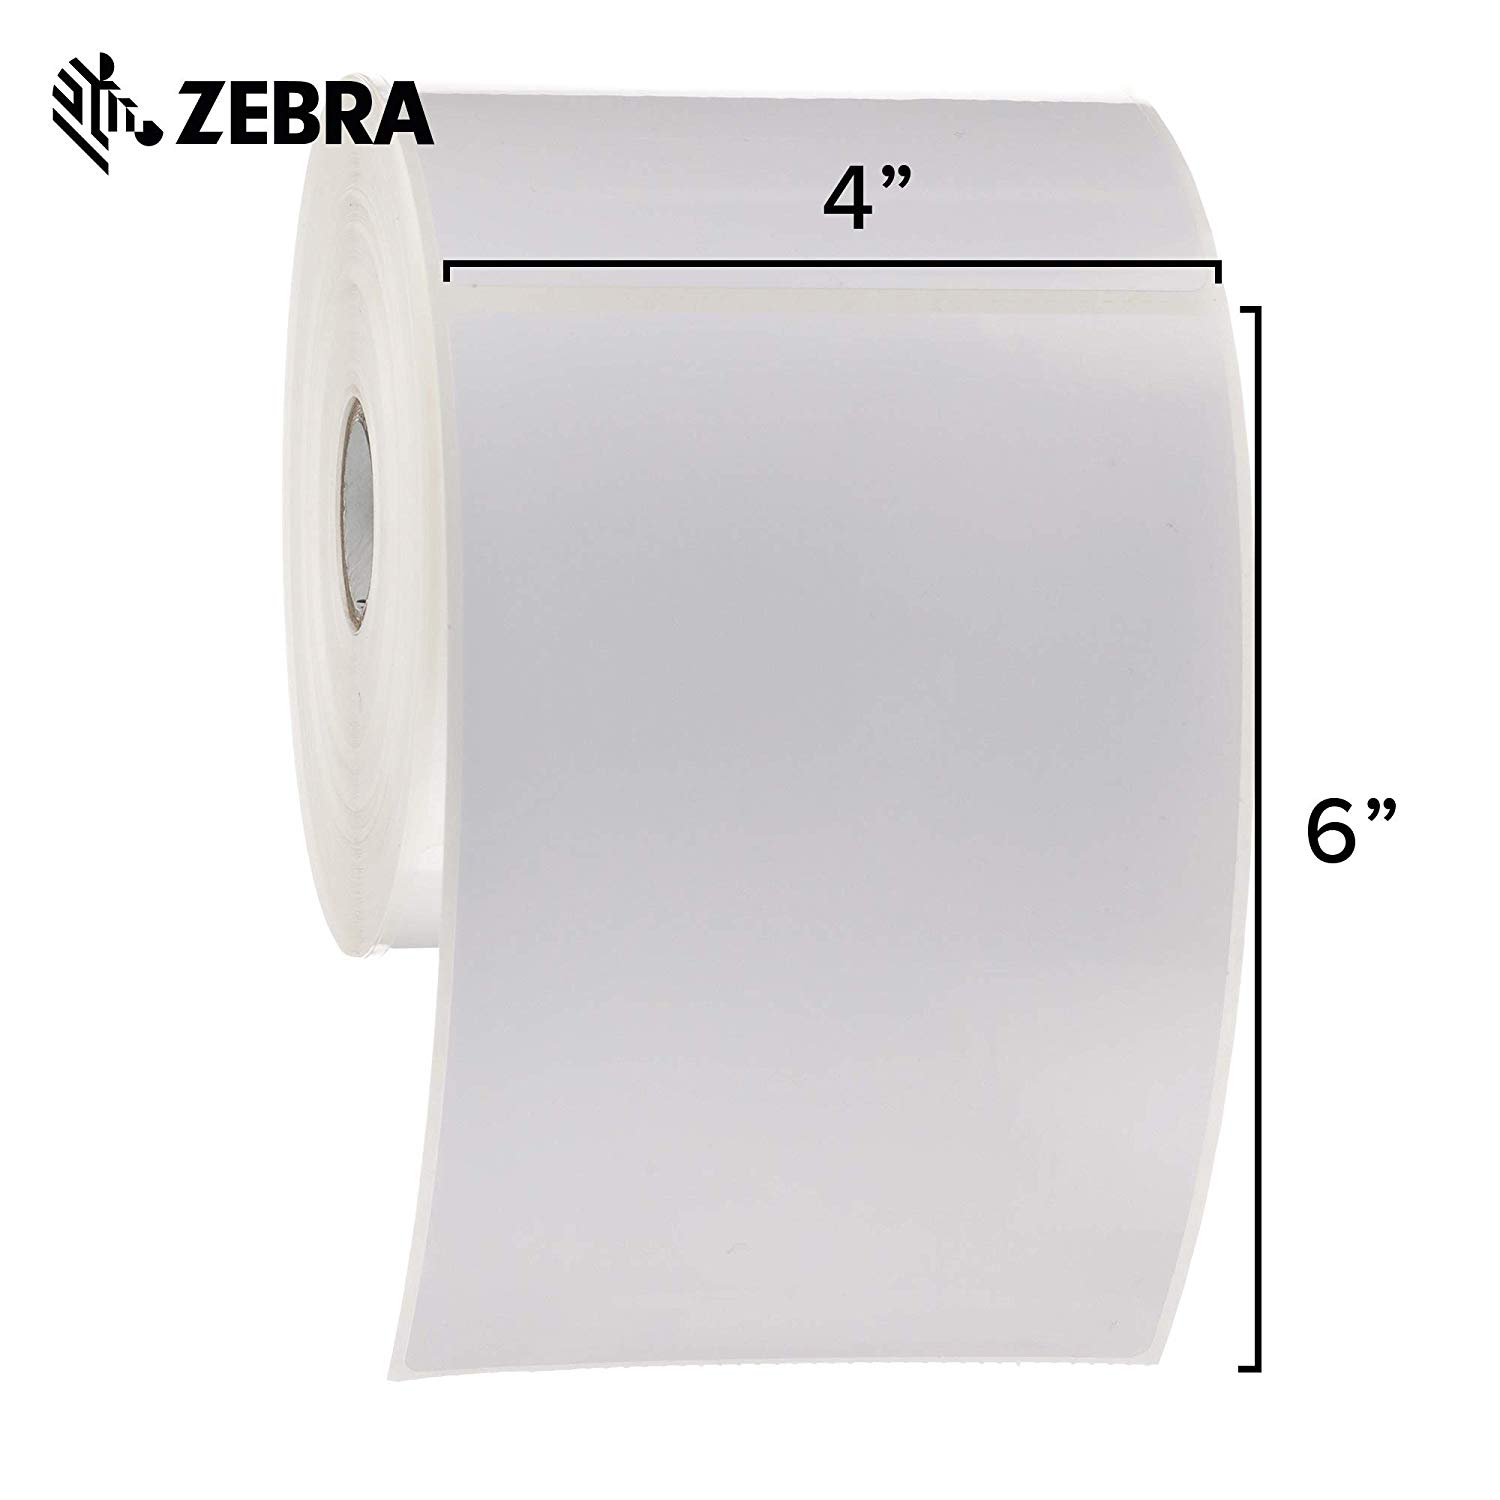 Zebra 18941 4"x6" Z-Ultimate 3000T White Labels - (4 Rolls). Label Size (WxH): 4" x 6" Labels Per Roll: 460.Core Size: 1"
Outside Diameter: 5"